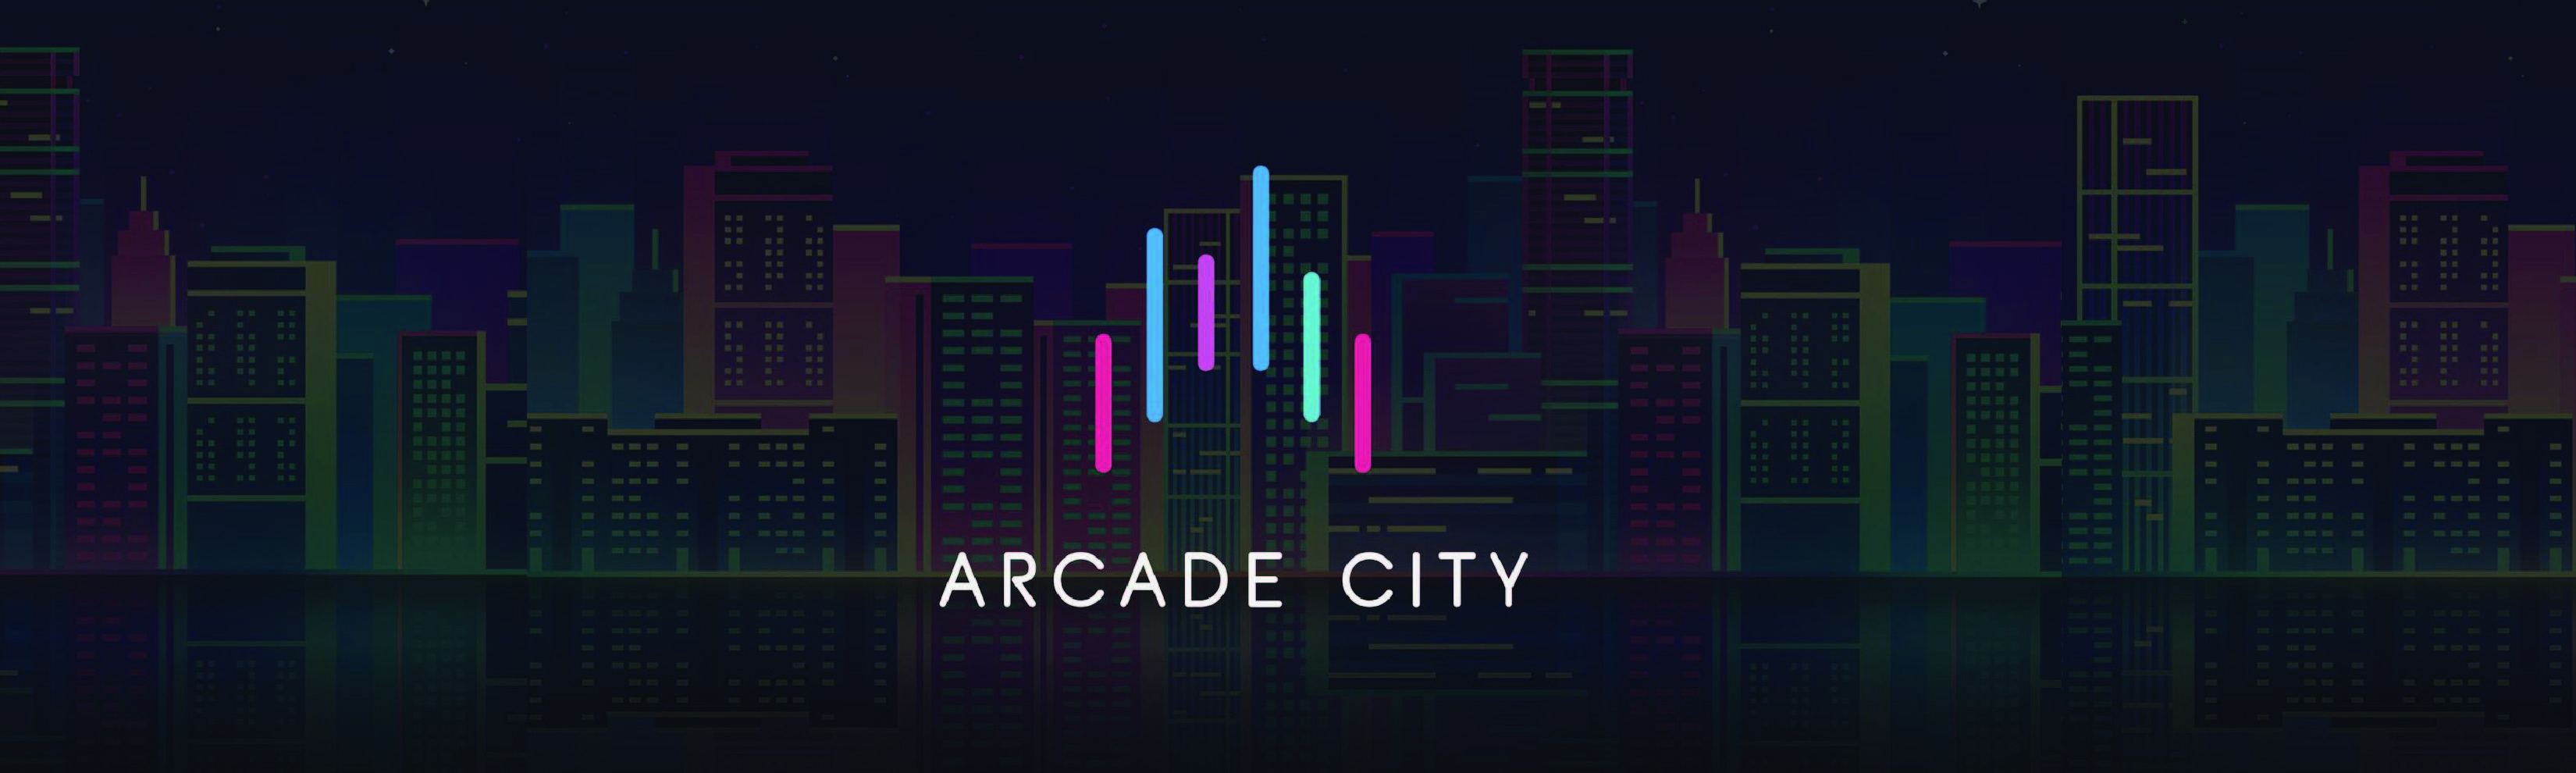 arcade city.jpg